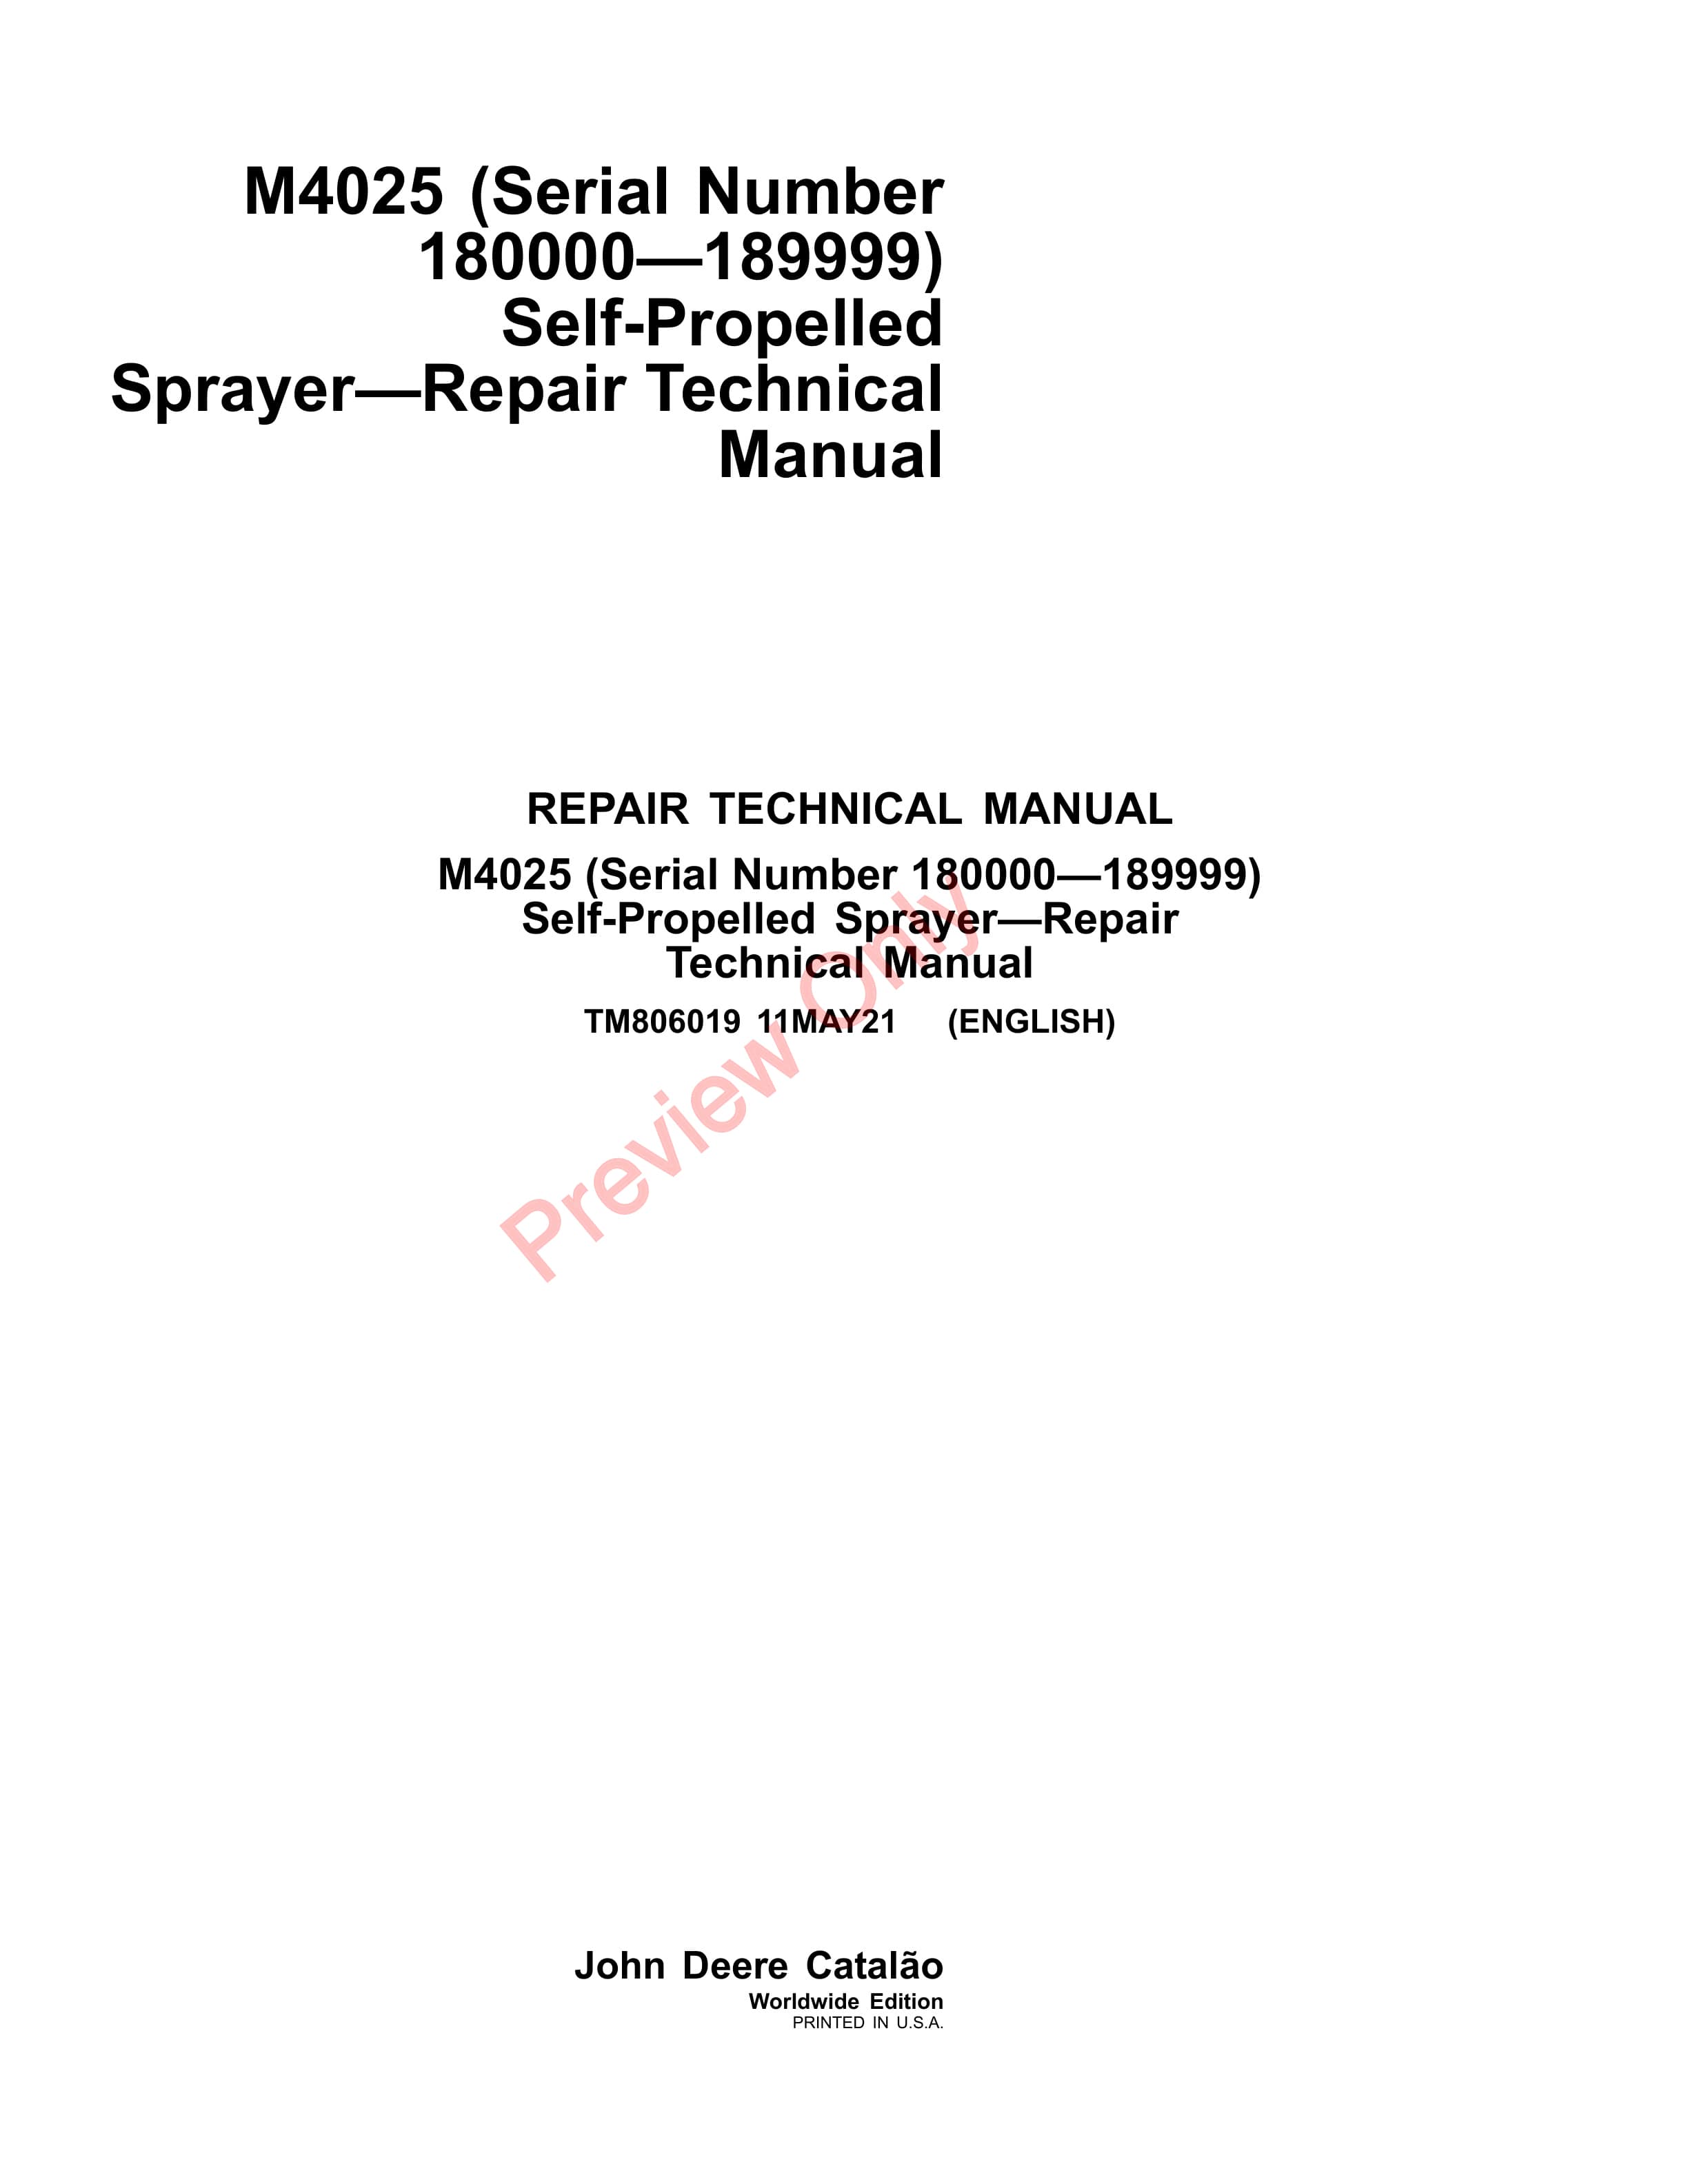 John Deere M4025 Self Propelled Sprayer 180000 189999 Repair Technical Manual TM806019 11MAY21 1